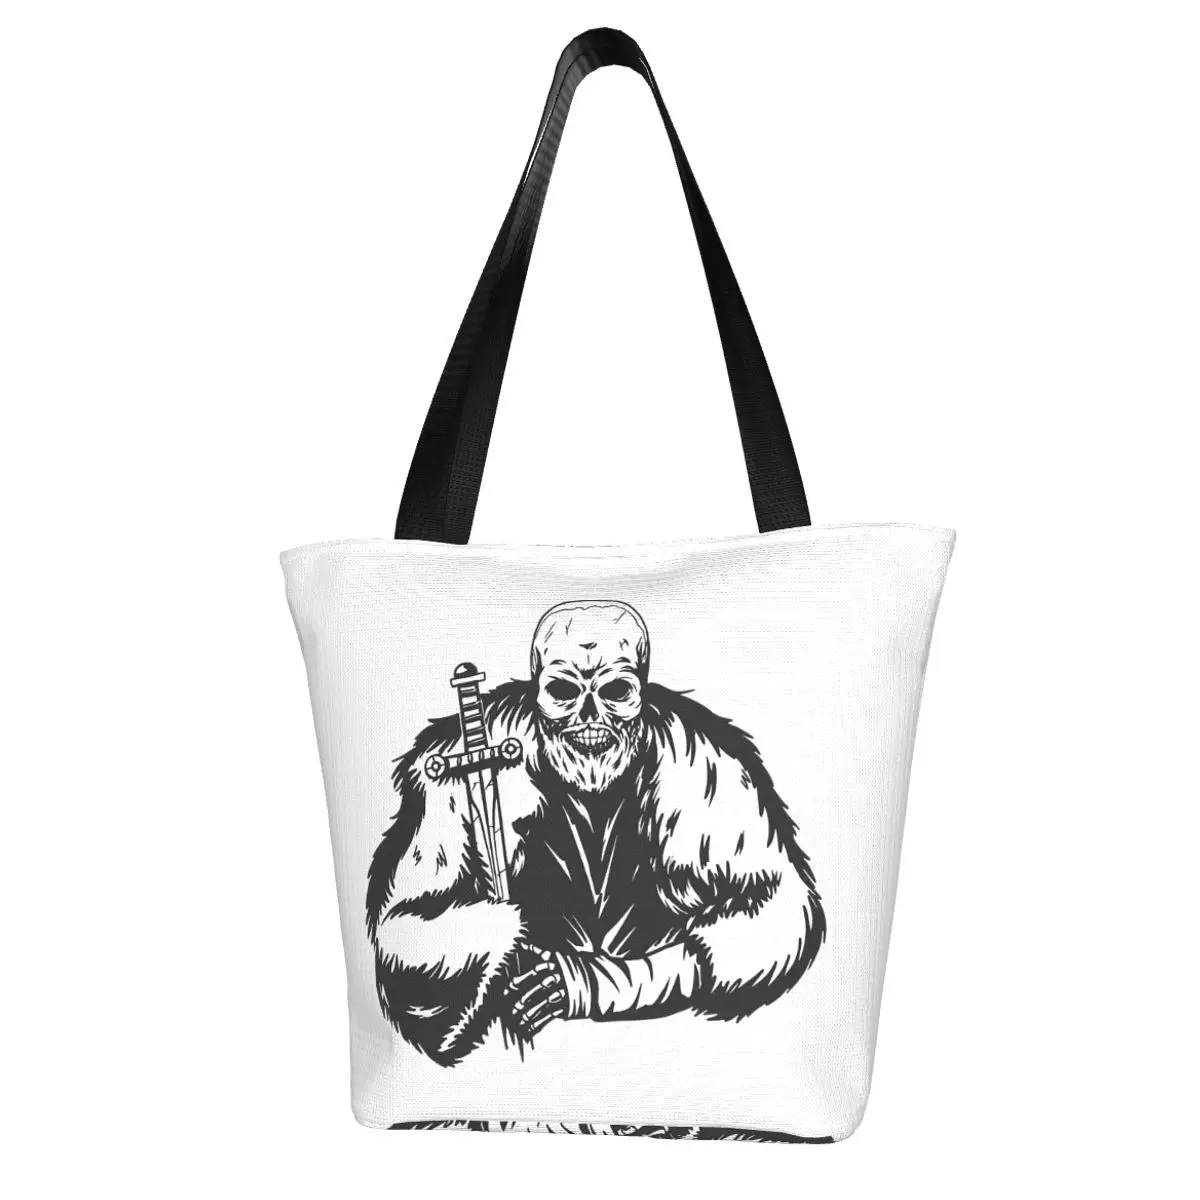 Viking Warrior Skull With Sword And Coat Shopping Bag Aesthetic Cloth Outdoor Handbag Female Fashion Bags